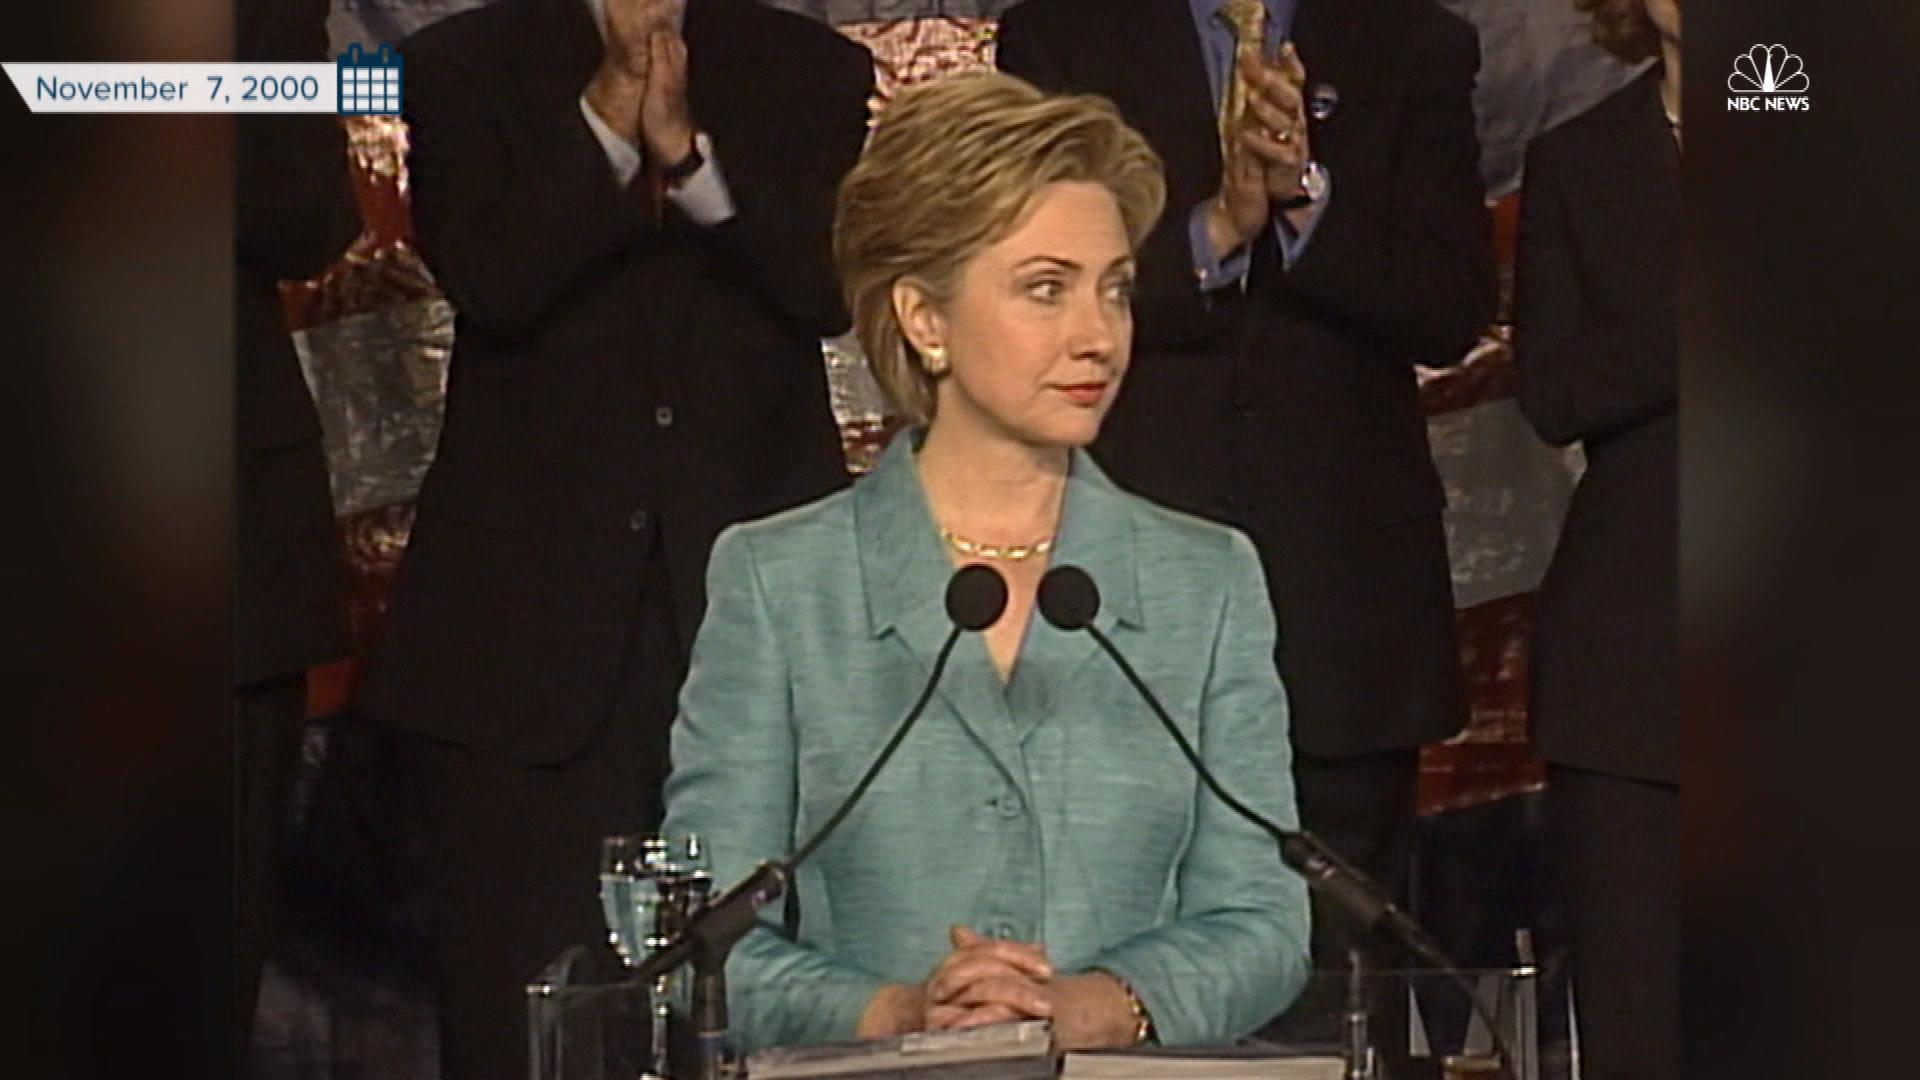 Flashback: Hillary Clinton as Senator - NBC News1920 x 1080